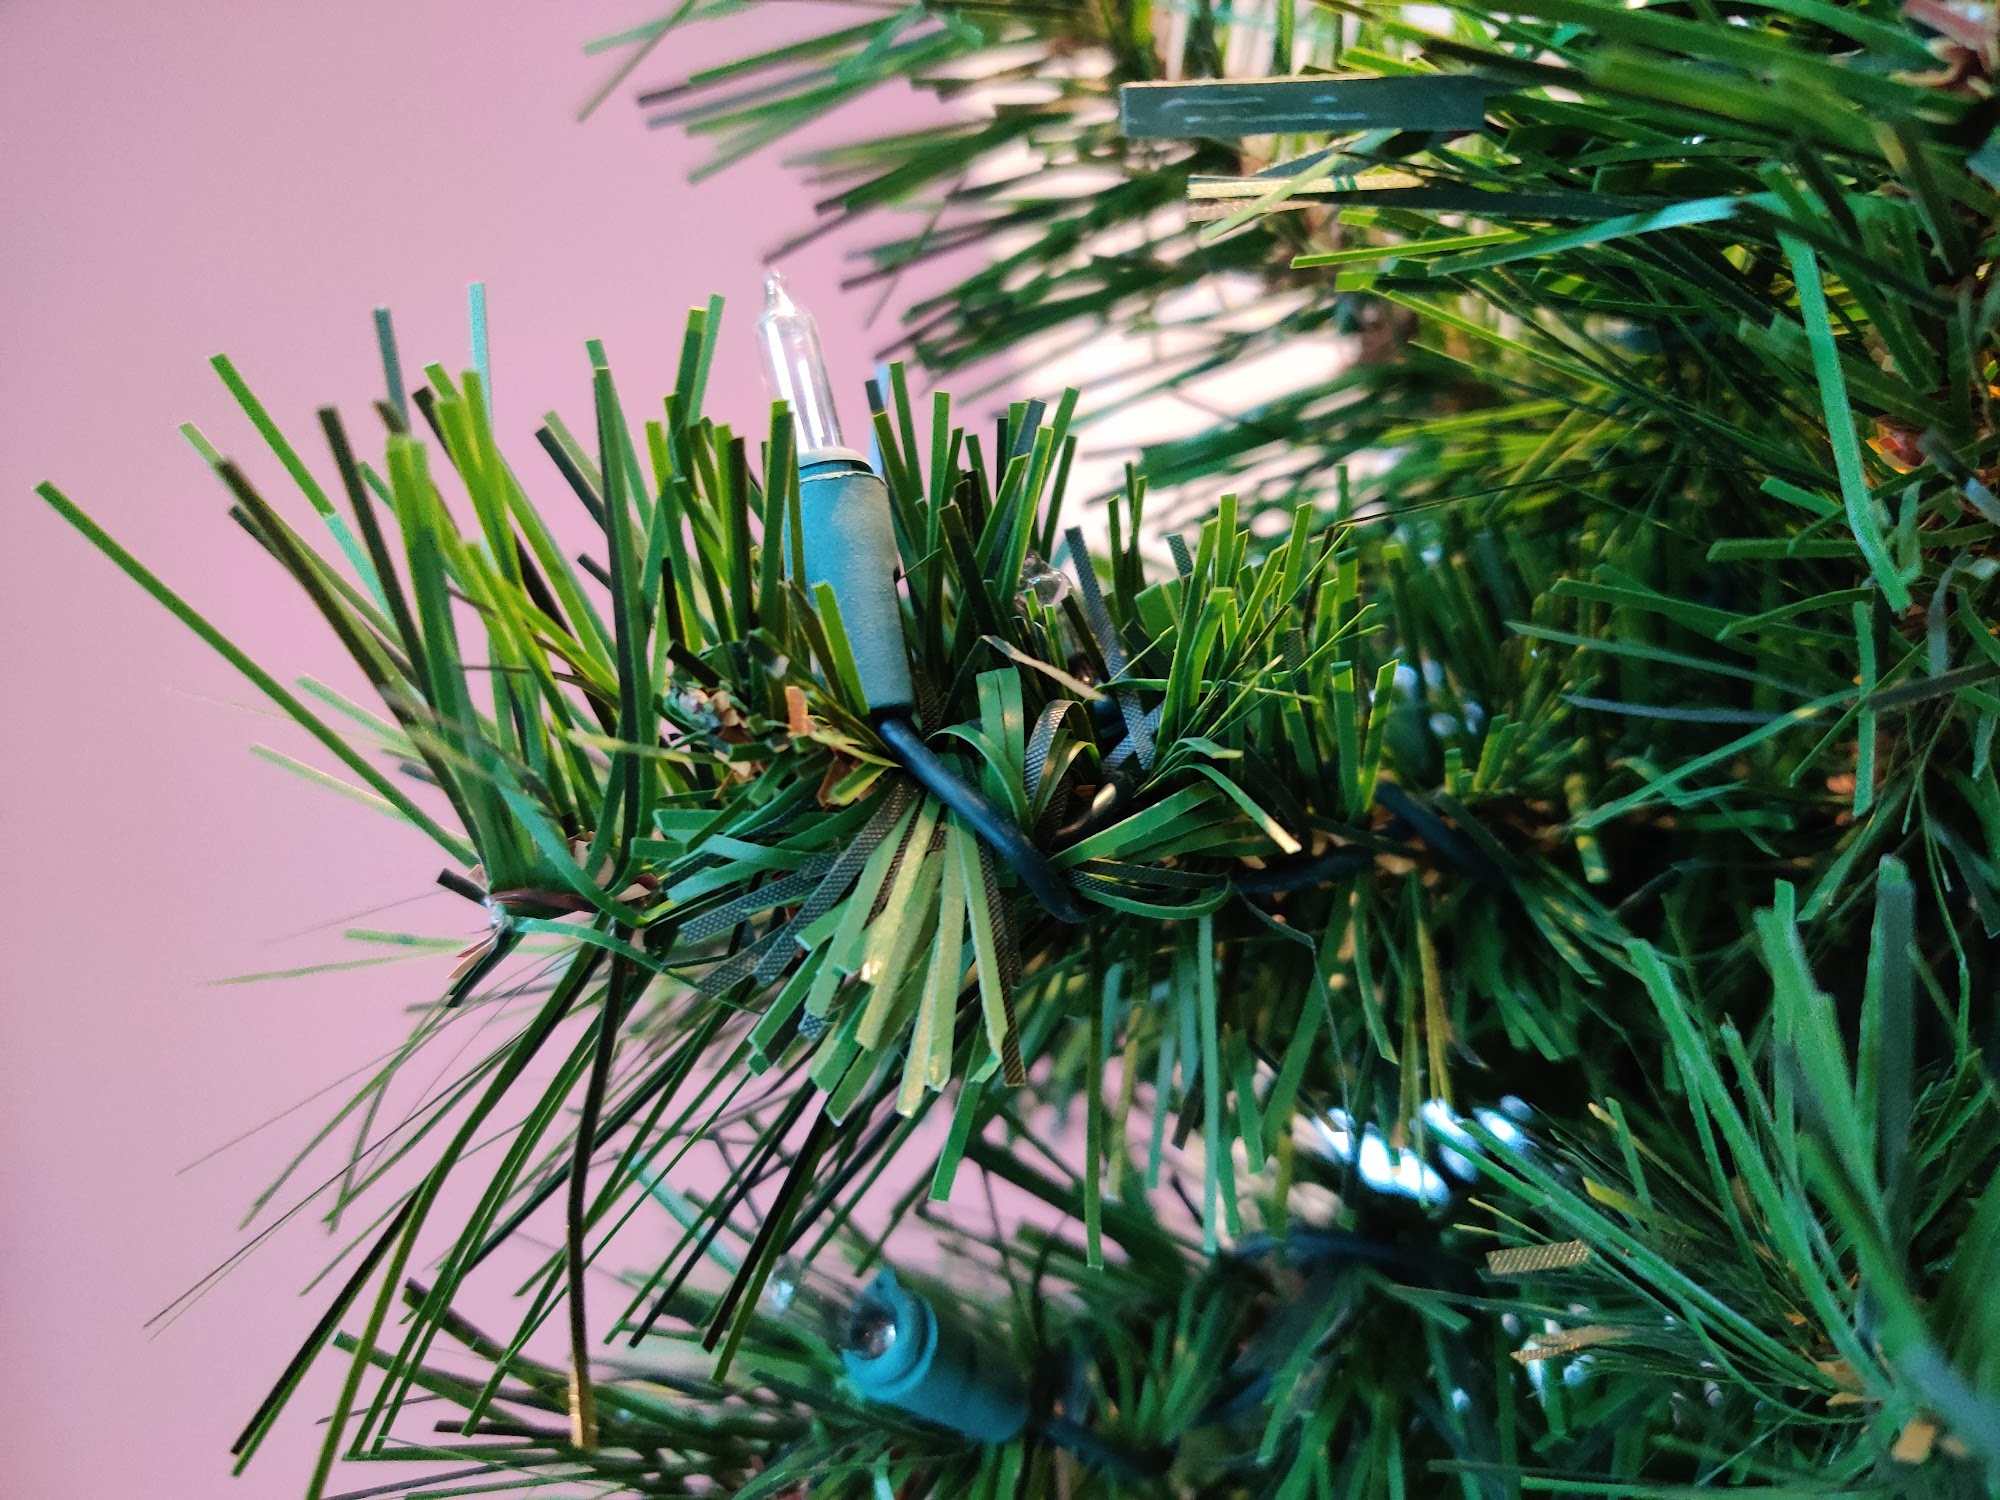 5 ways a Christmas tree is like an old codebase